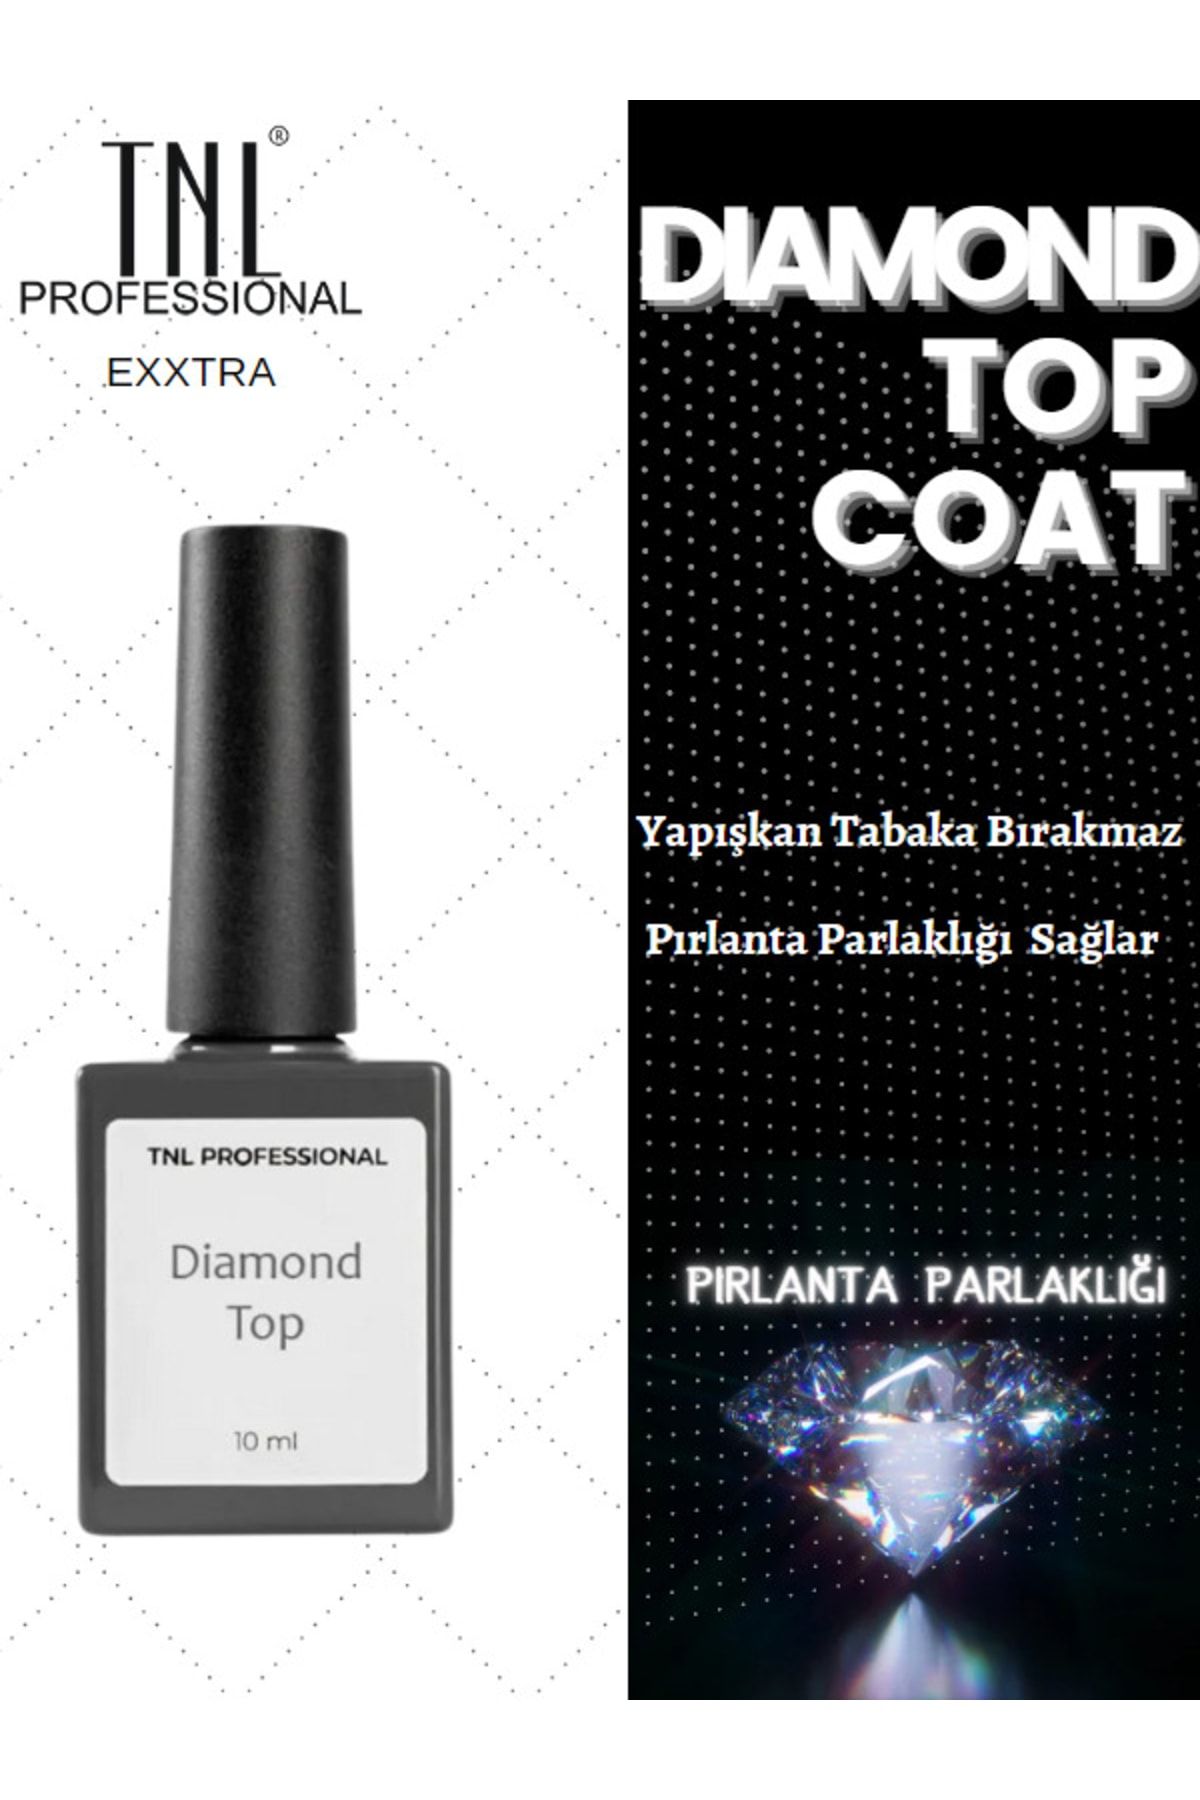 TNL Exxtra Diamond Top Coat 10 ml